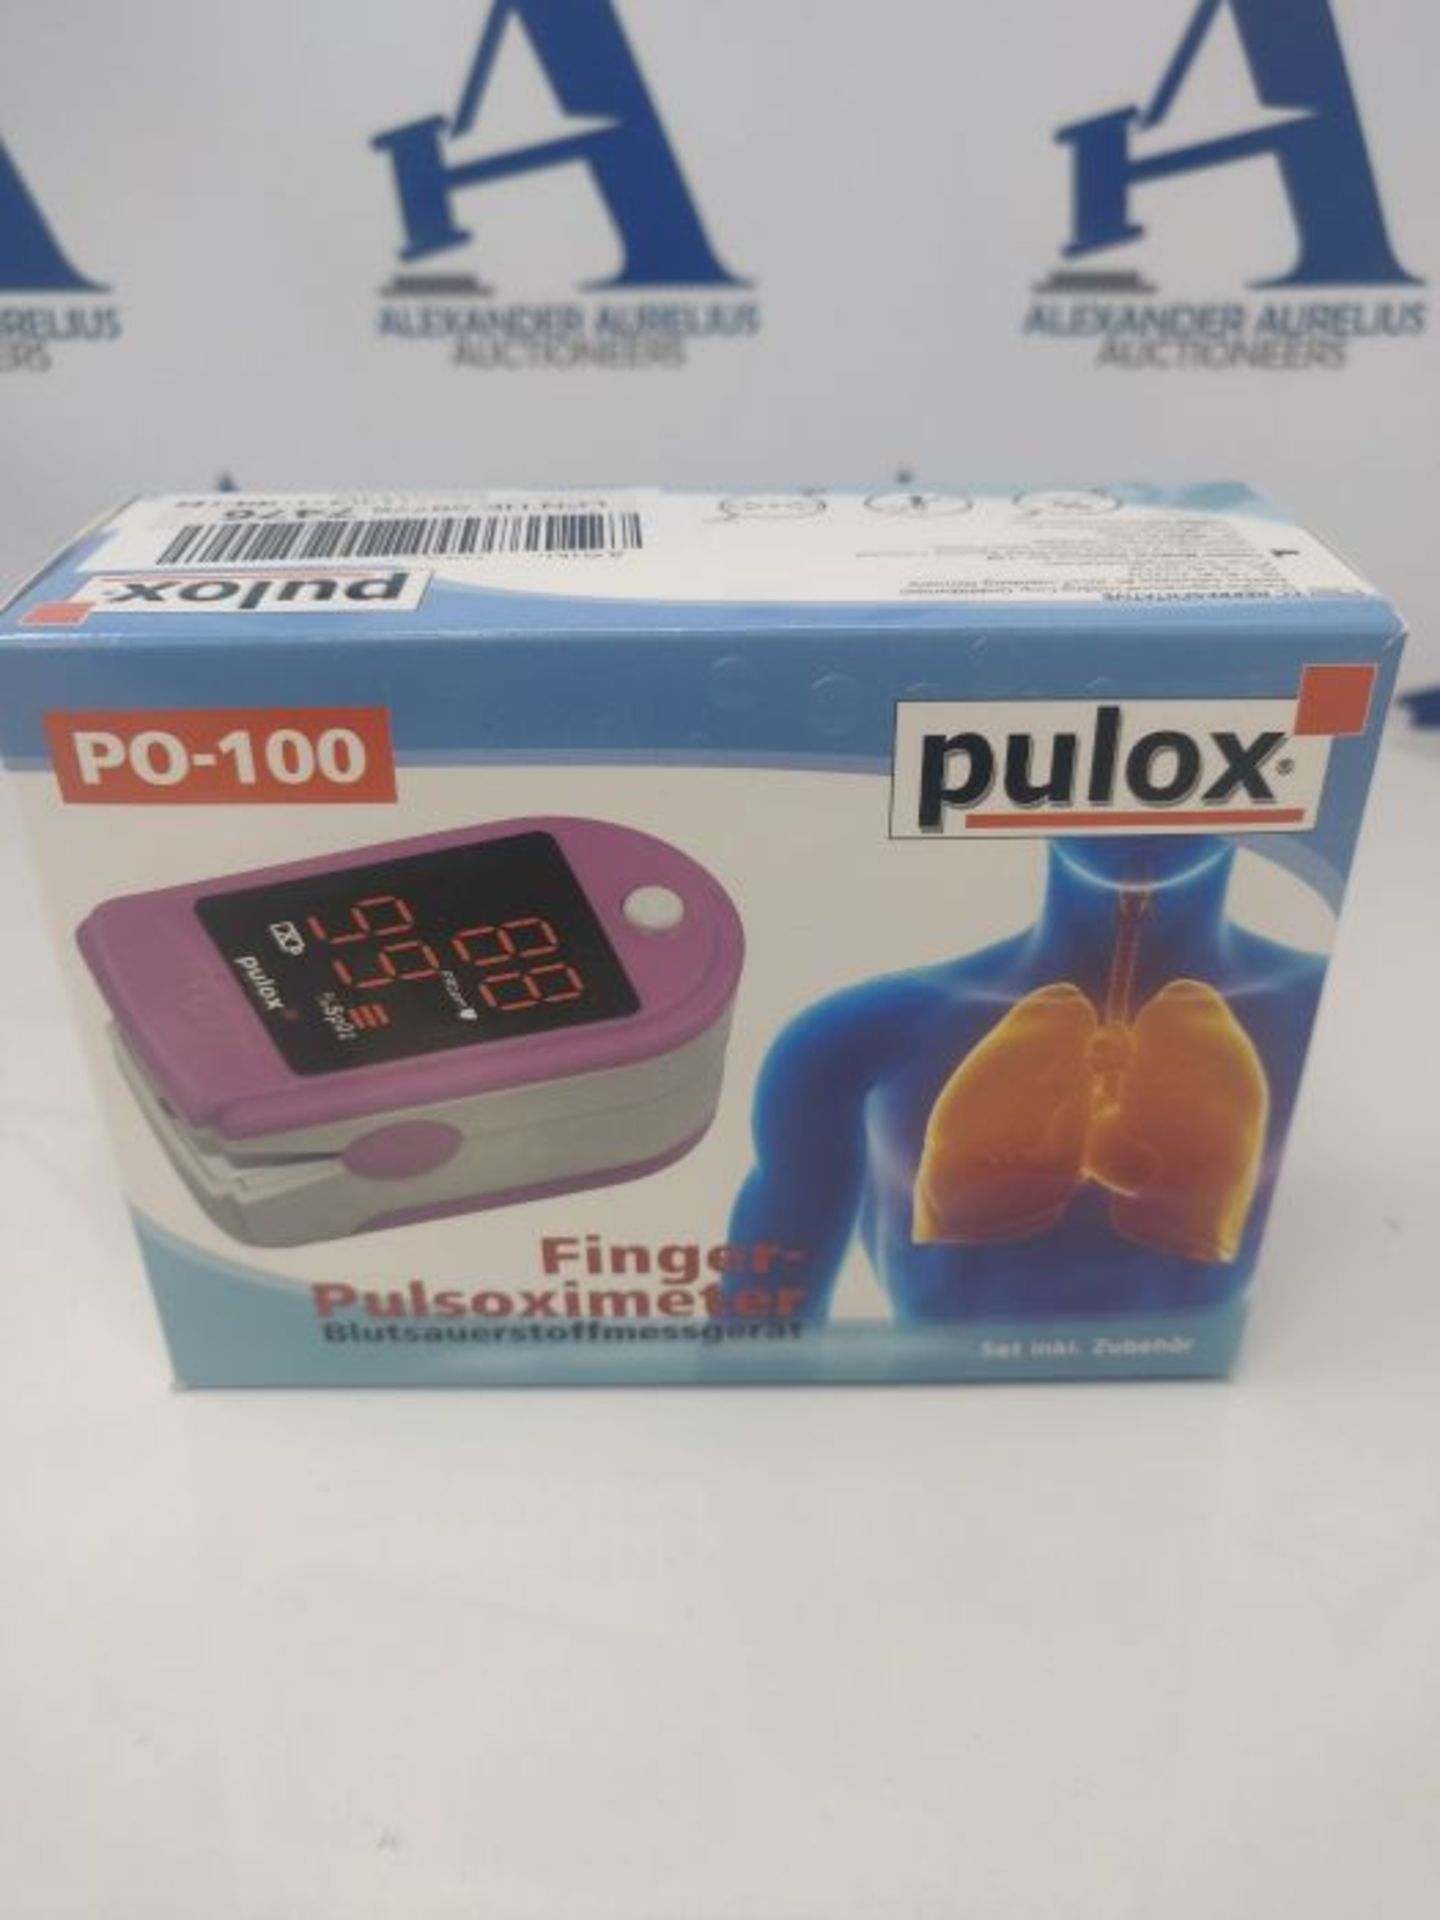 Pulox PO-100 Pulsoximeter mit LED-Anzeige, inkl. Hardcase, Batterien, SchutzhÃ¼lle, - Image 2 of 3